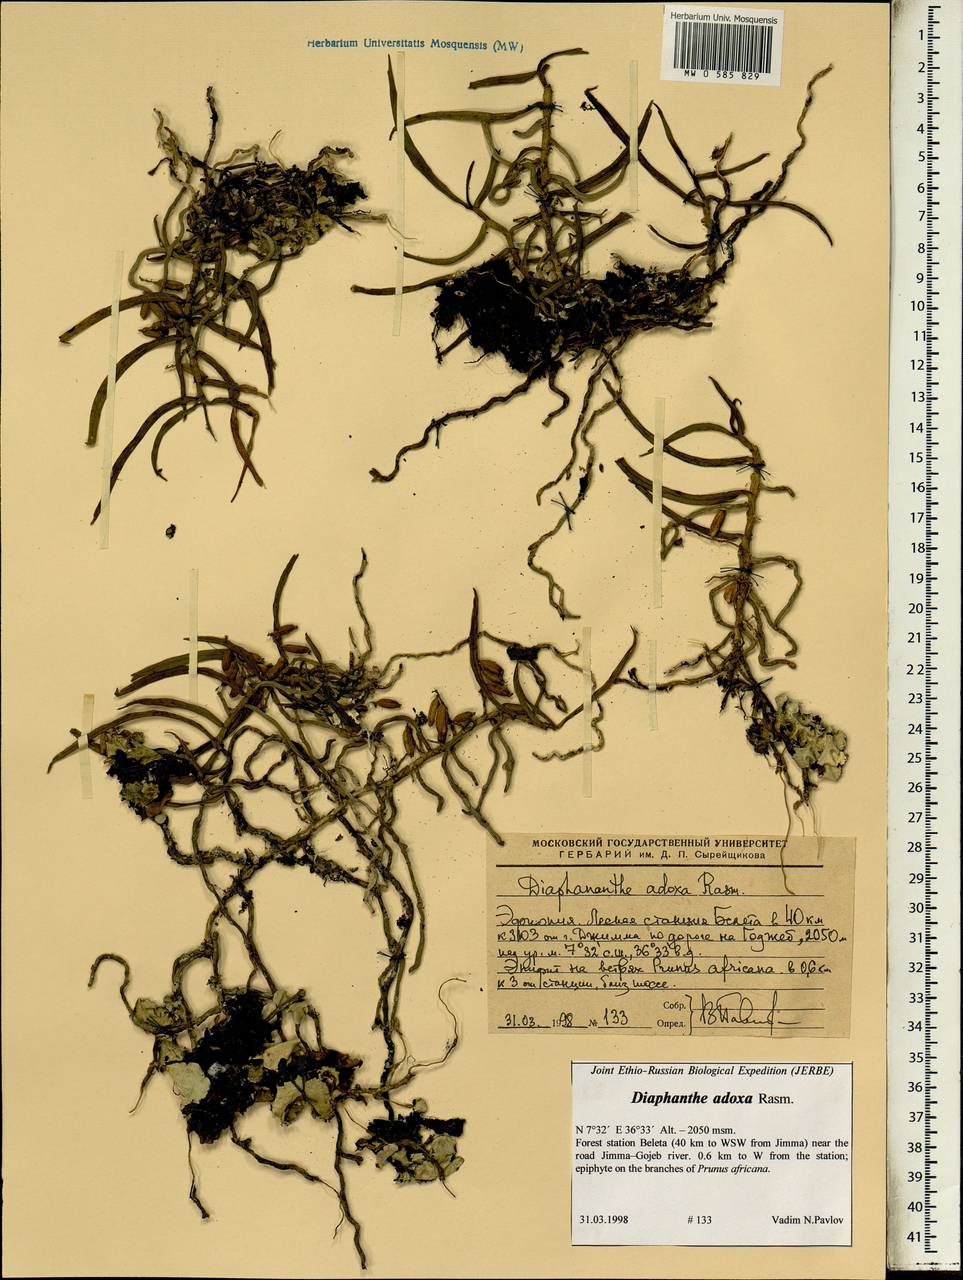 Rhipidoglossum adoxum (F.N.Rasm.) Senghas, Африка (AFR) (Эфиопия)